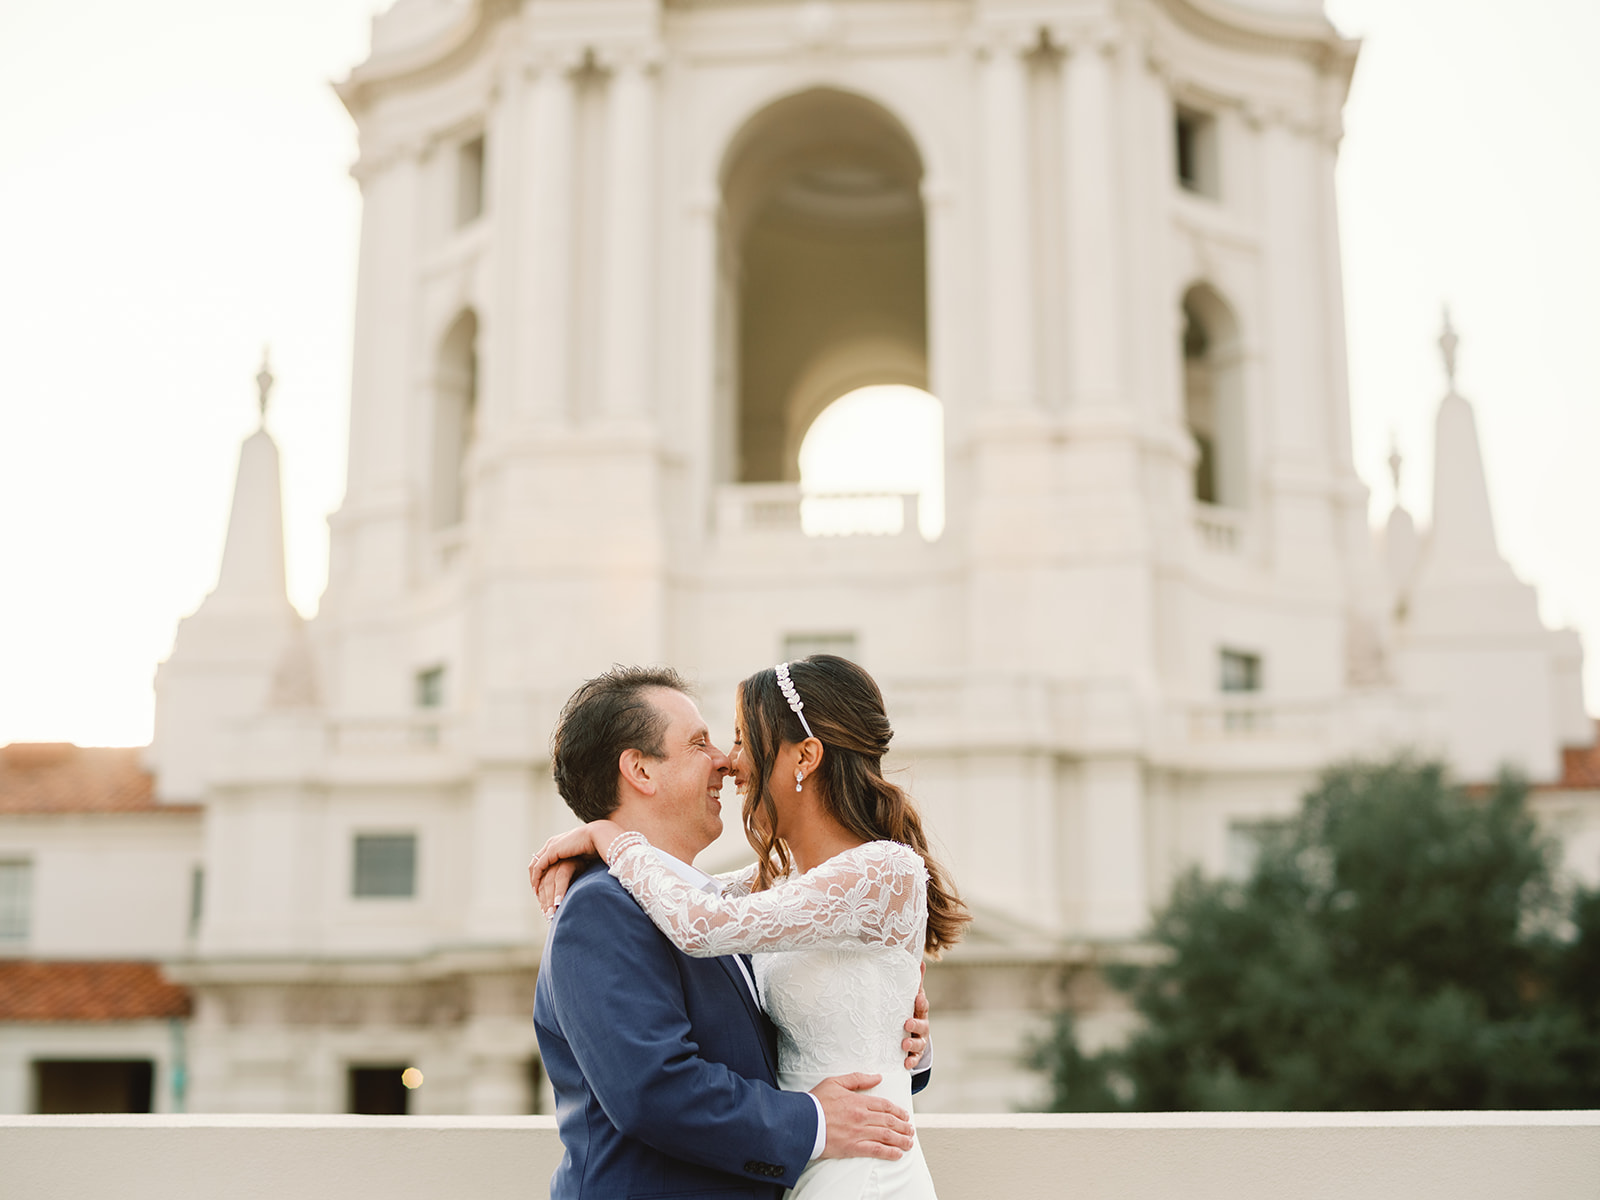 Pasadena City Hall, Wedding, Engagement, Elopement, Bridal Portraits, California, Civil Ceremony